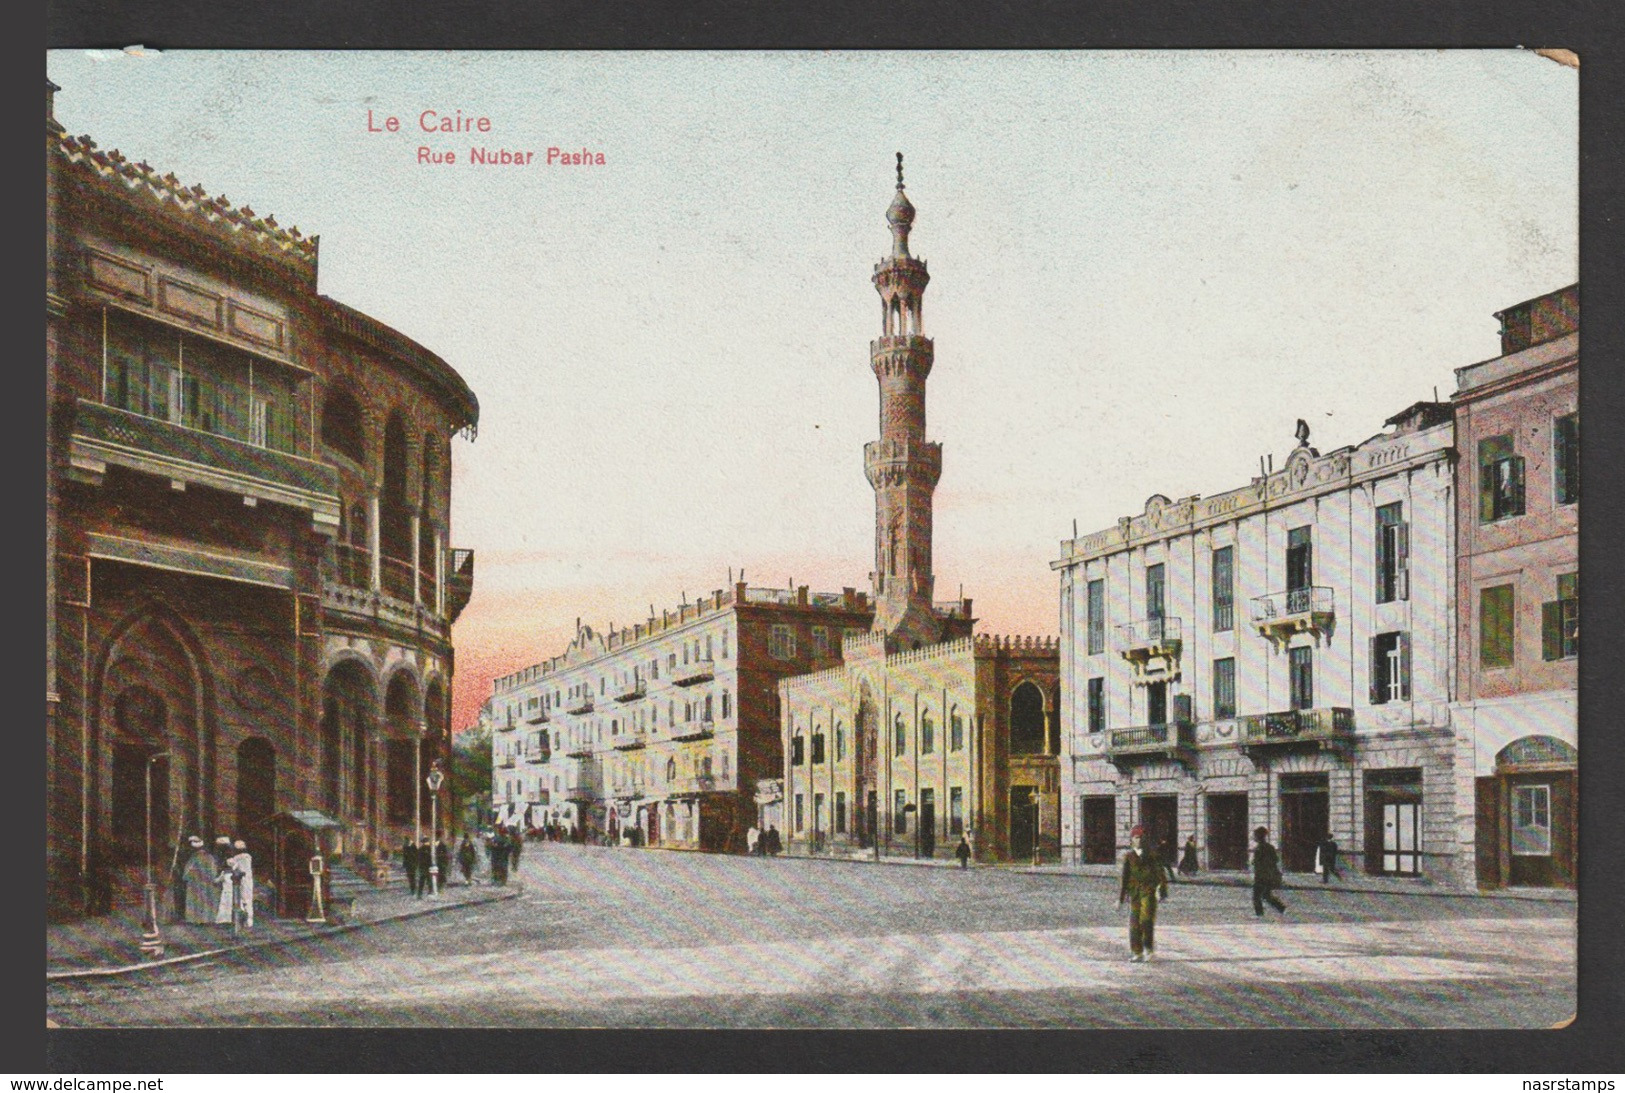 Egypt - Very Rare - Vintage Post Card - Nubar Pasha Street - Cairo - 1866-1914 Khedivate Of Egypt